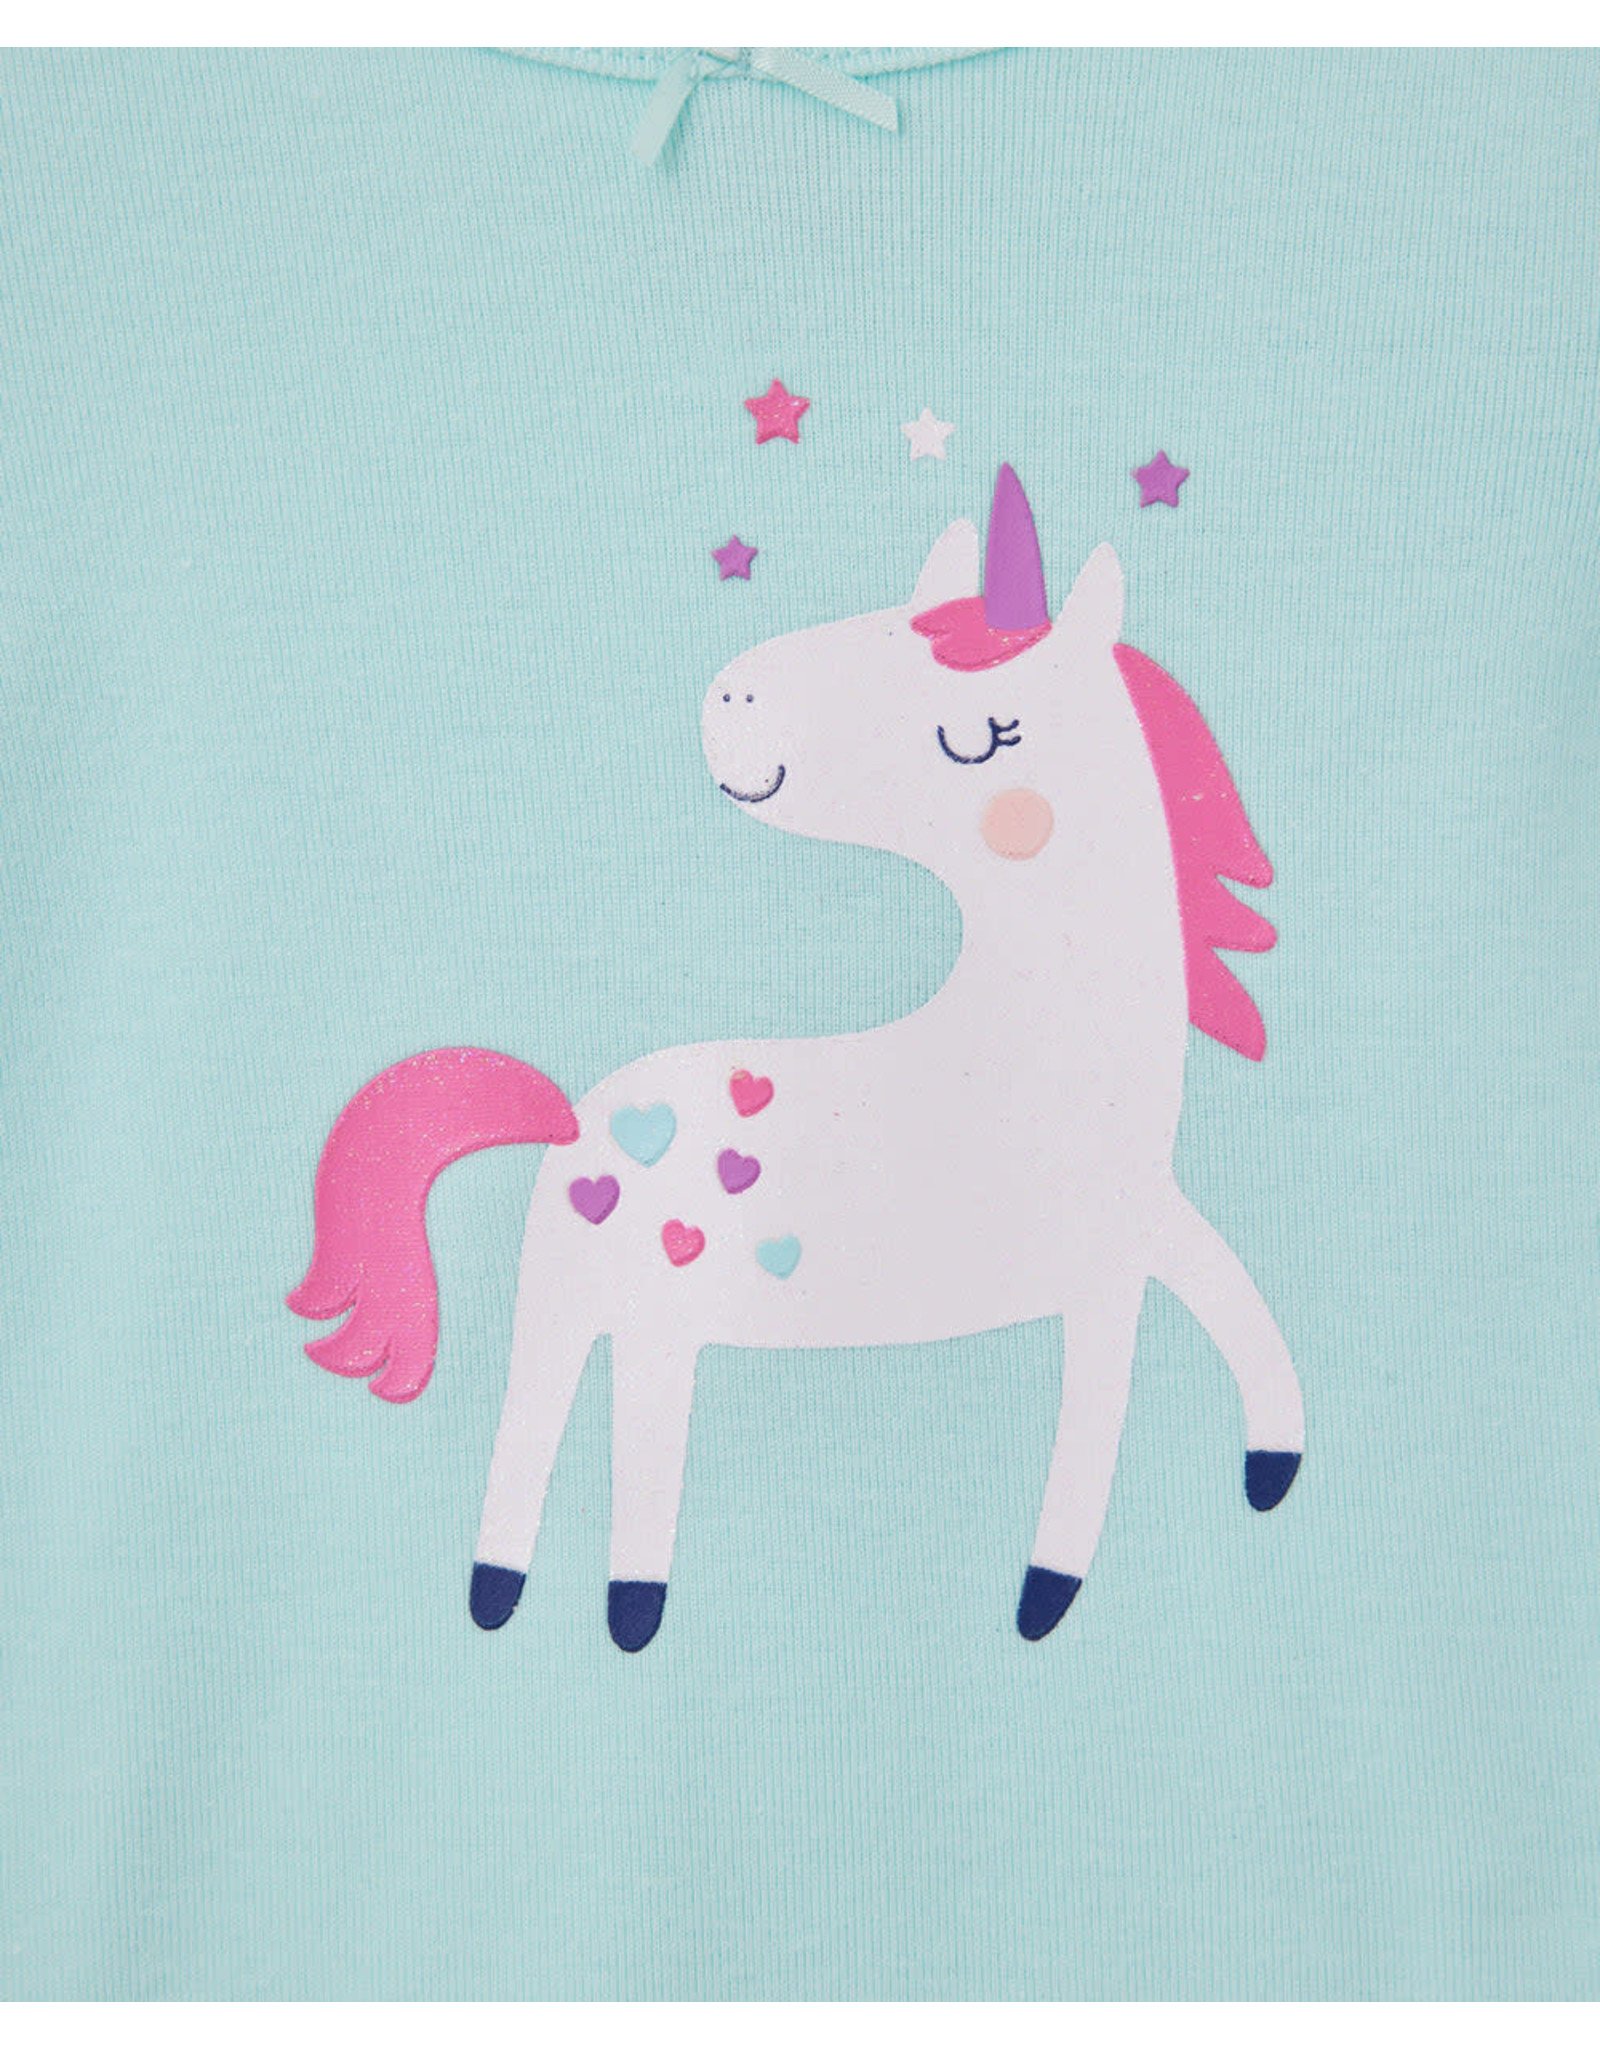 Little Me Unicorn 4-Piece Pajama Set